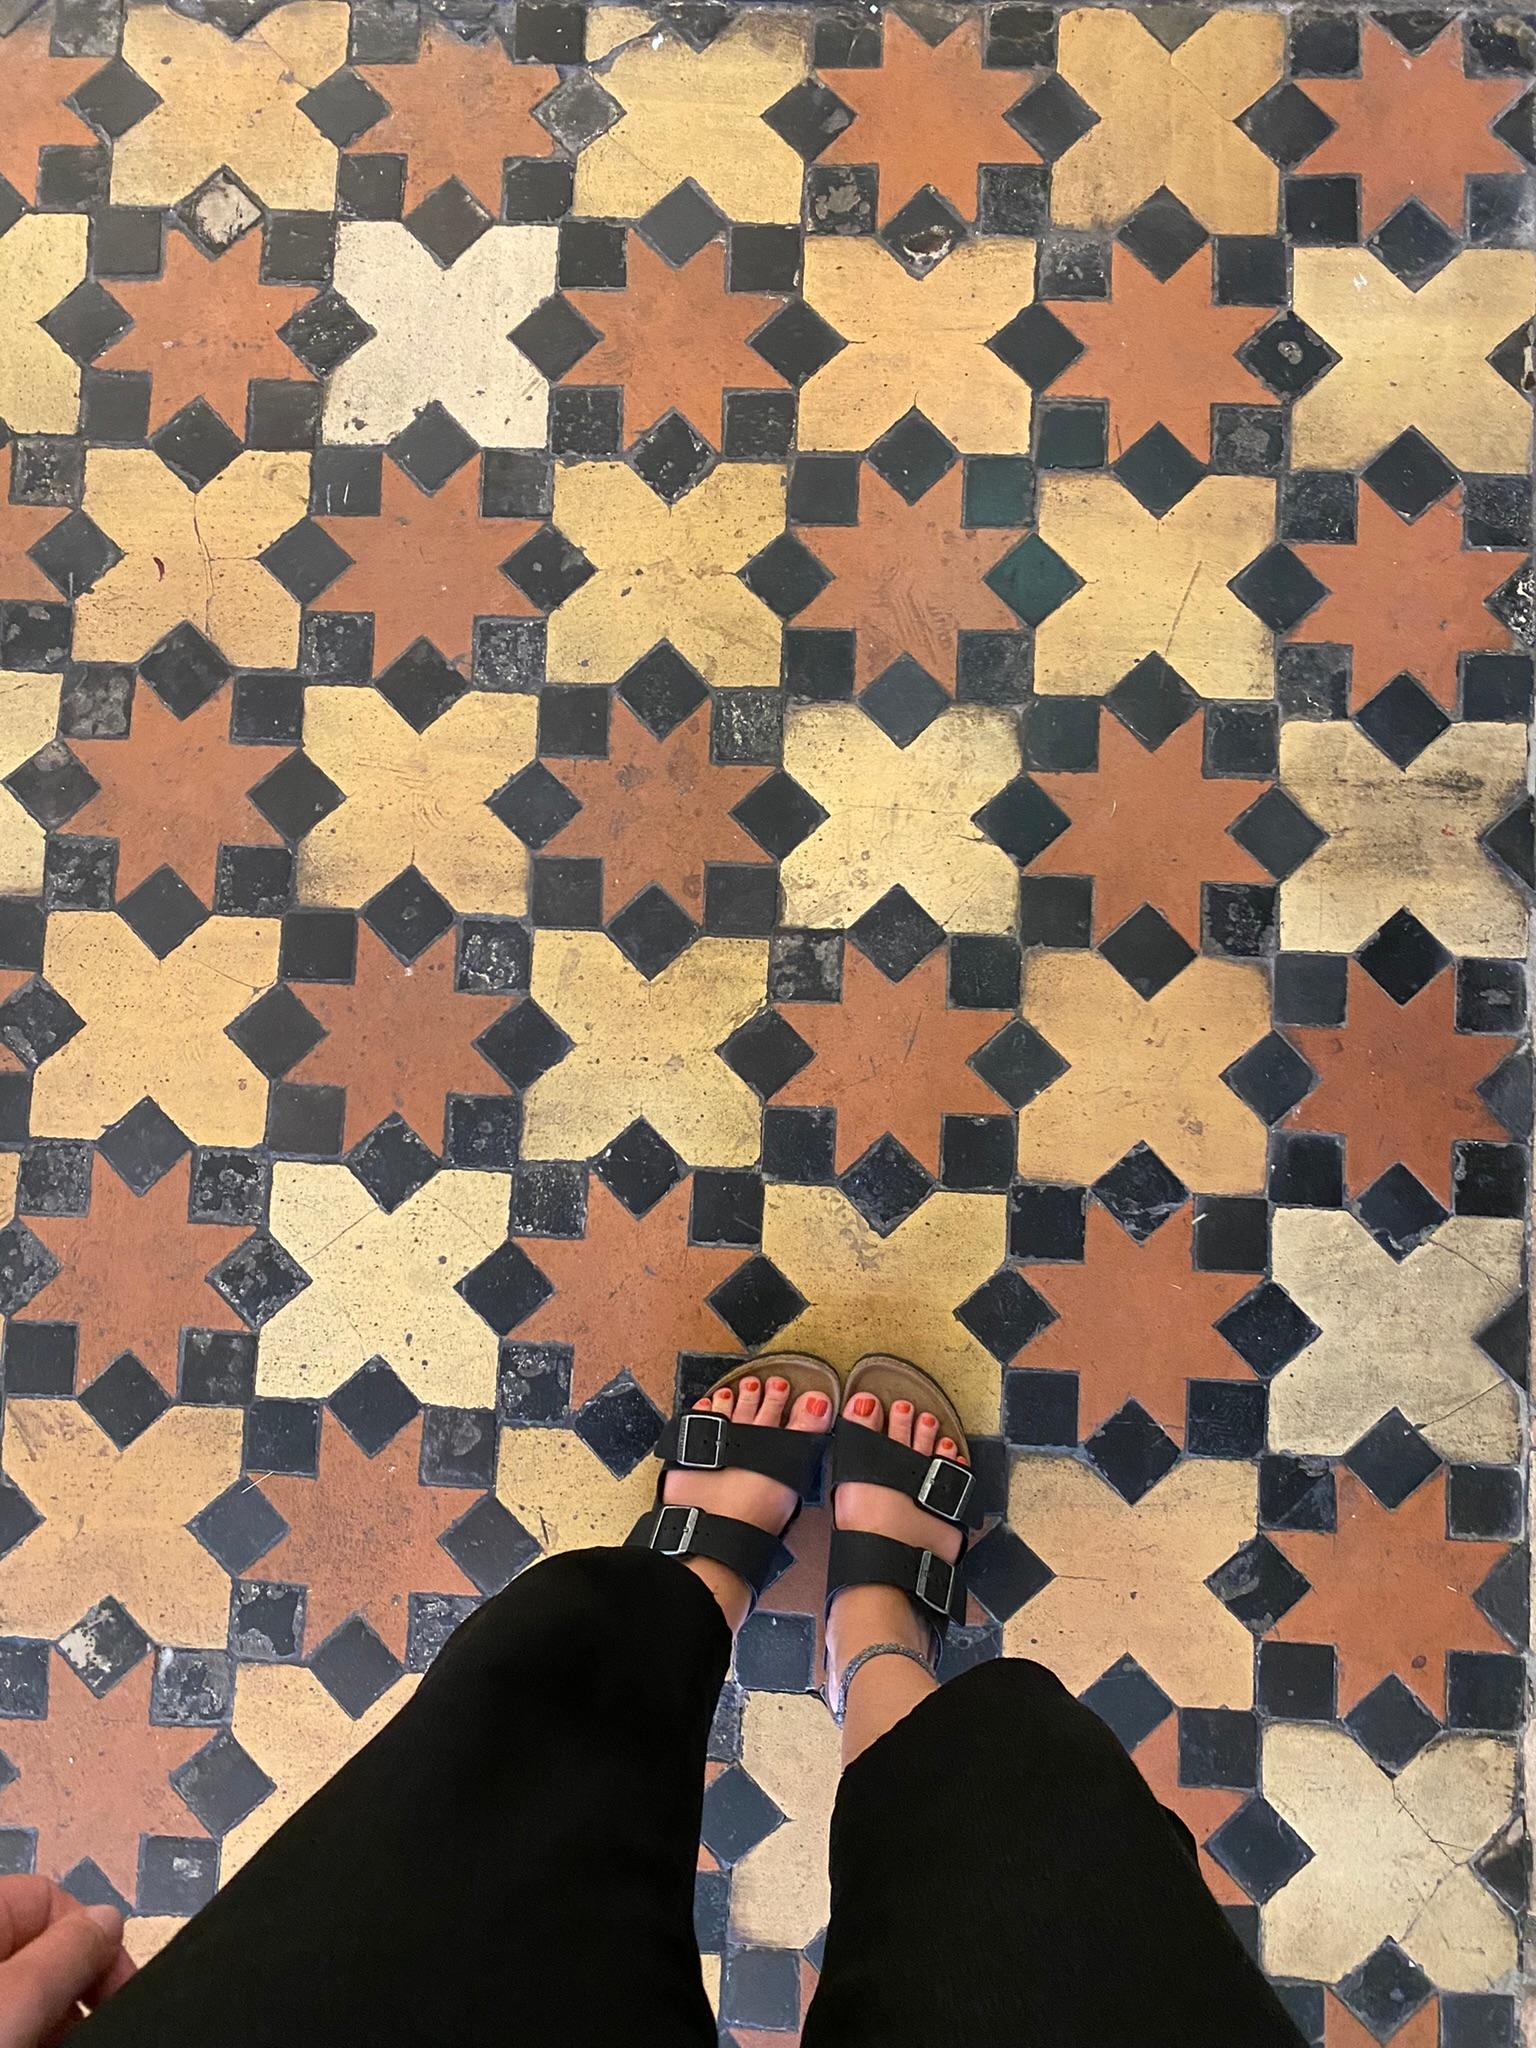 Fußbodenliebe 🥰
#tiles #fliesen #fußboden #inlovewiththesetiles #künstlerhaushannover